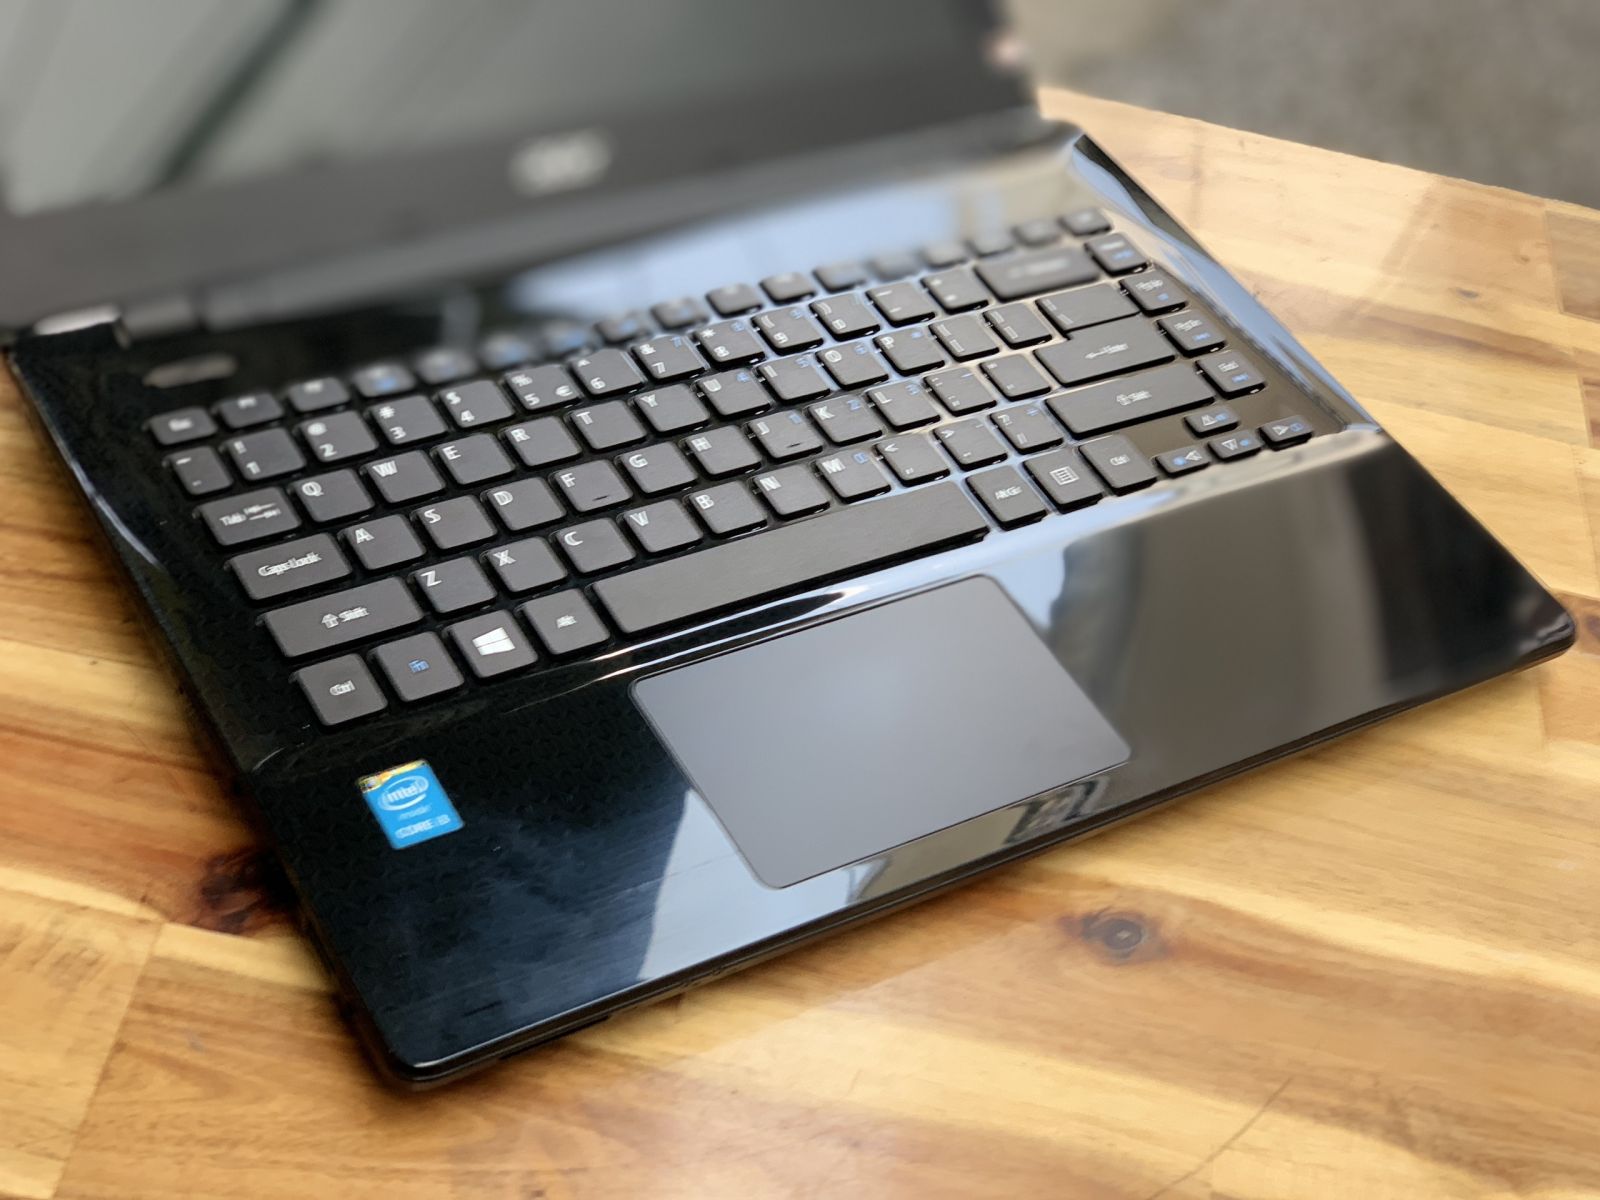 Laptop Acer E5-471/ i5 4210U/ 4G/ 500G/ 14in/ Đẹp Keng/ Zin 100%/ Giá rẻ1